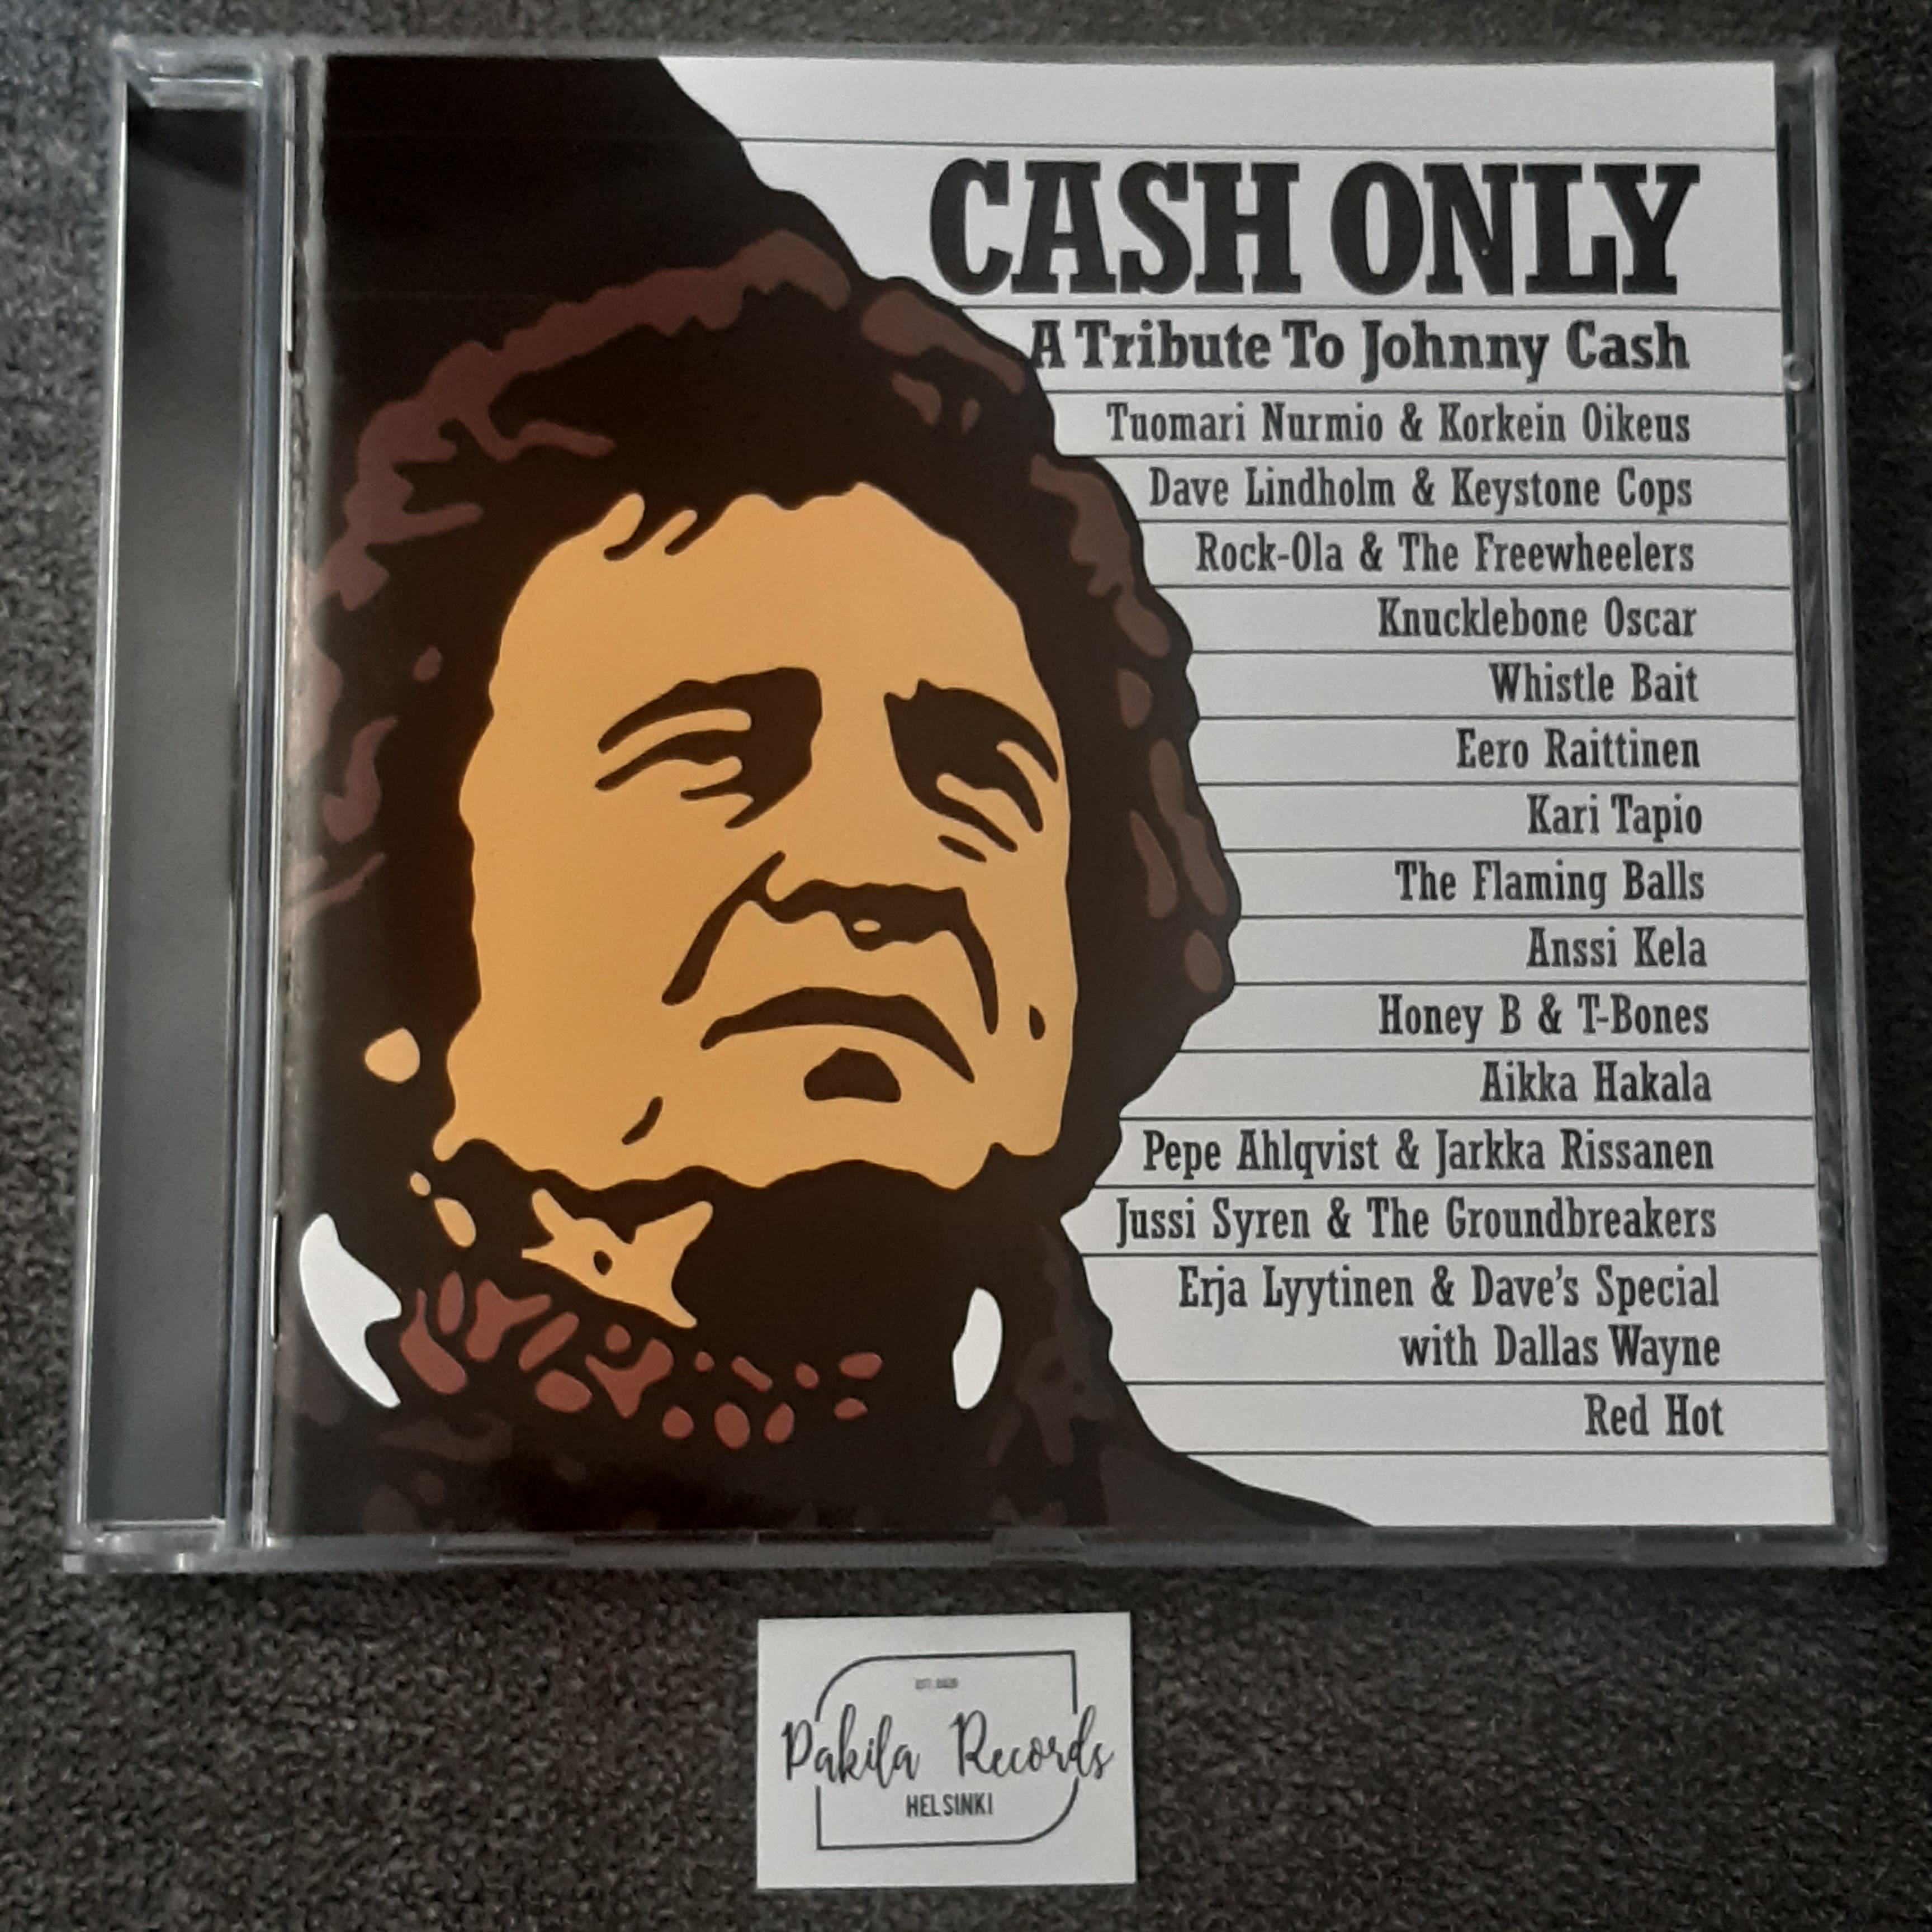 Cash Only - A Tribute To Johnny Cash - CD (käytetty)